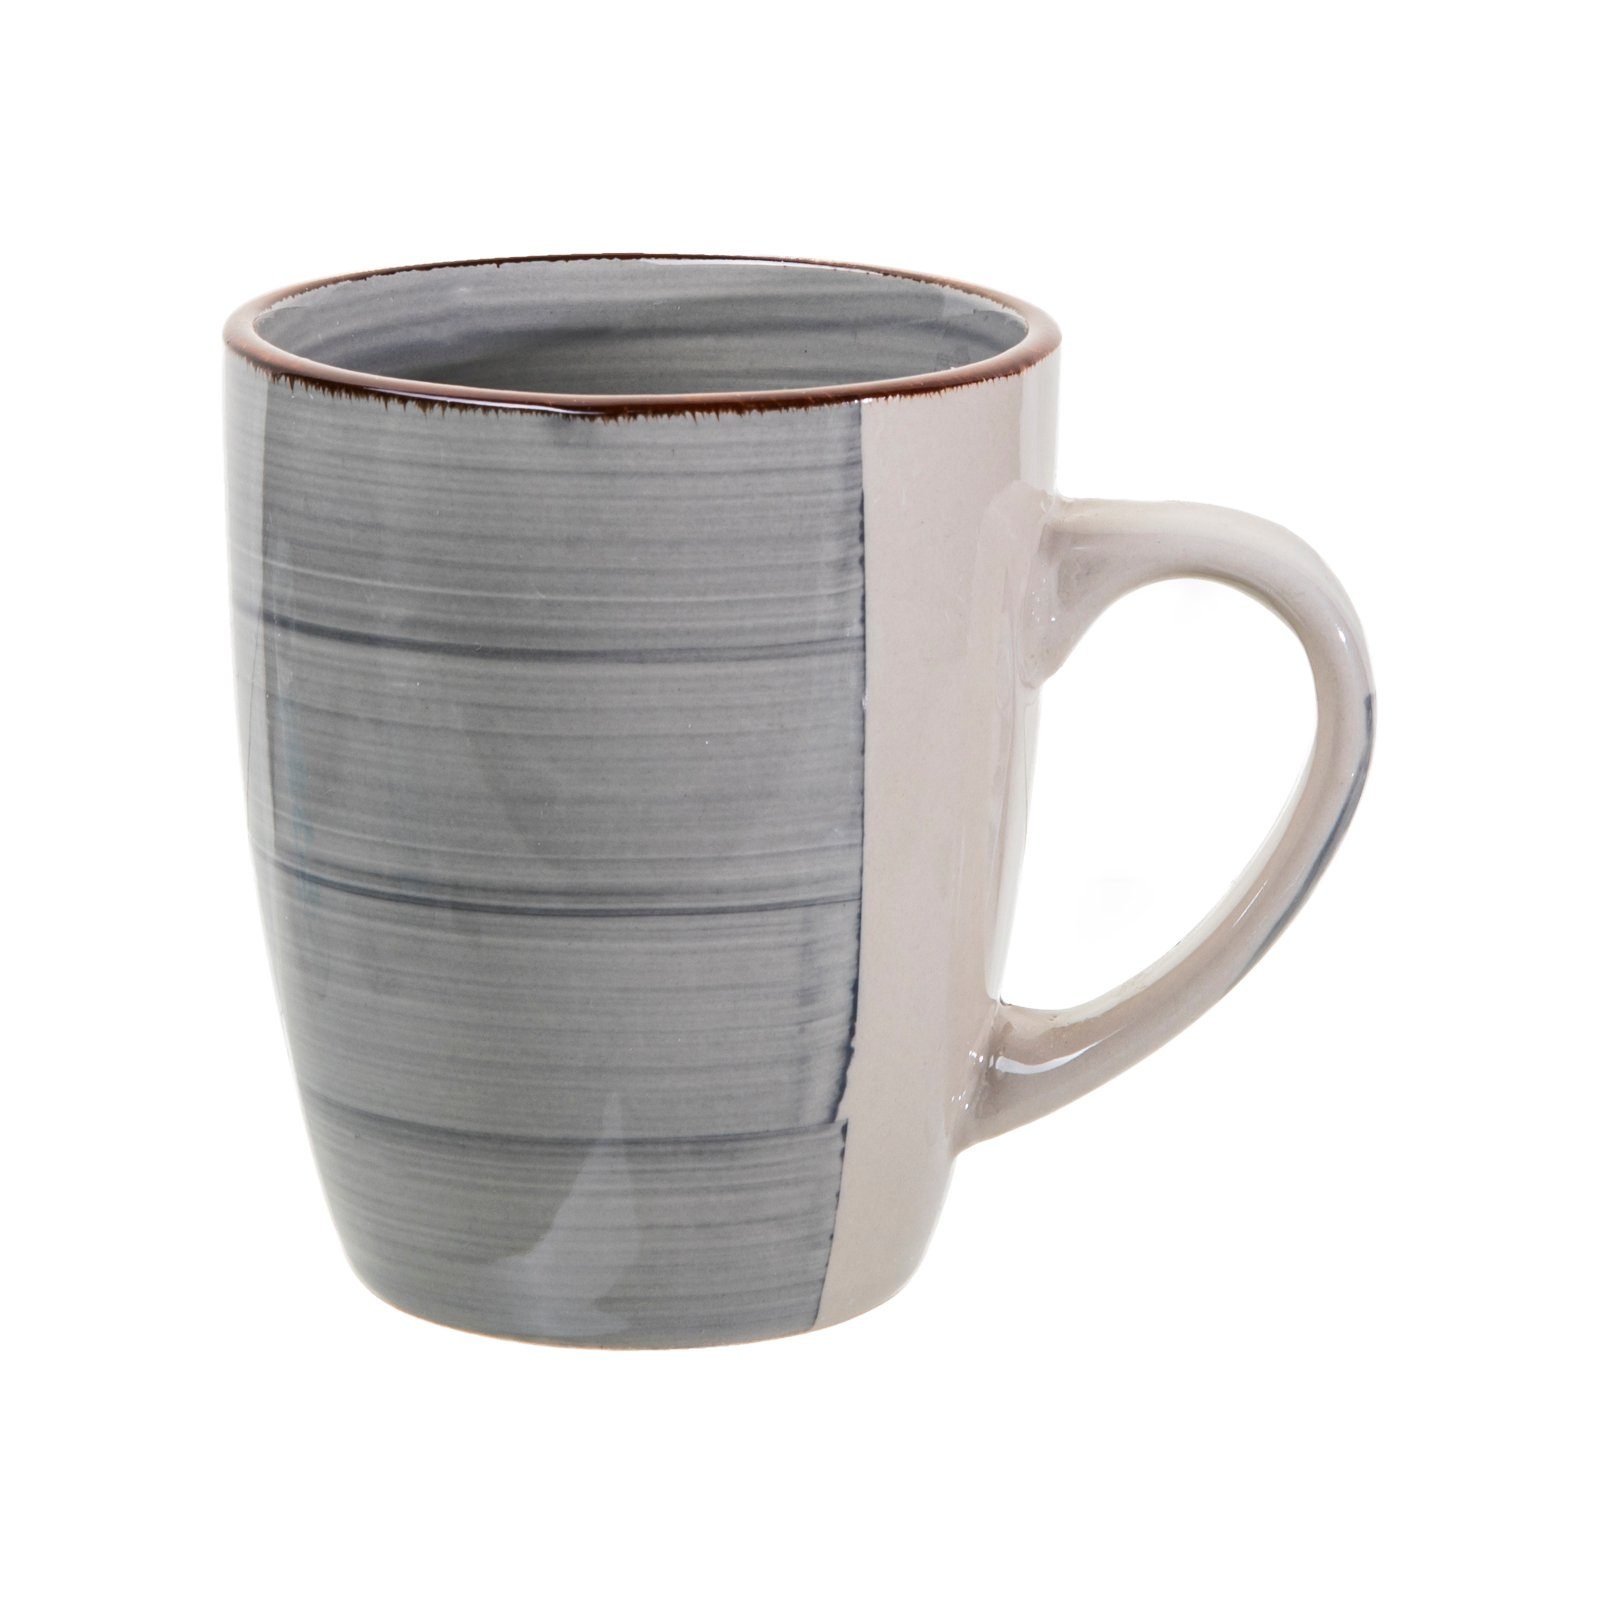 Becher Set Kaffeetassen Tee astor24 Tasse Qualität Kaffee Tassen Keramik, hochwertige in Geschirr, Pott PREMIUM